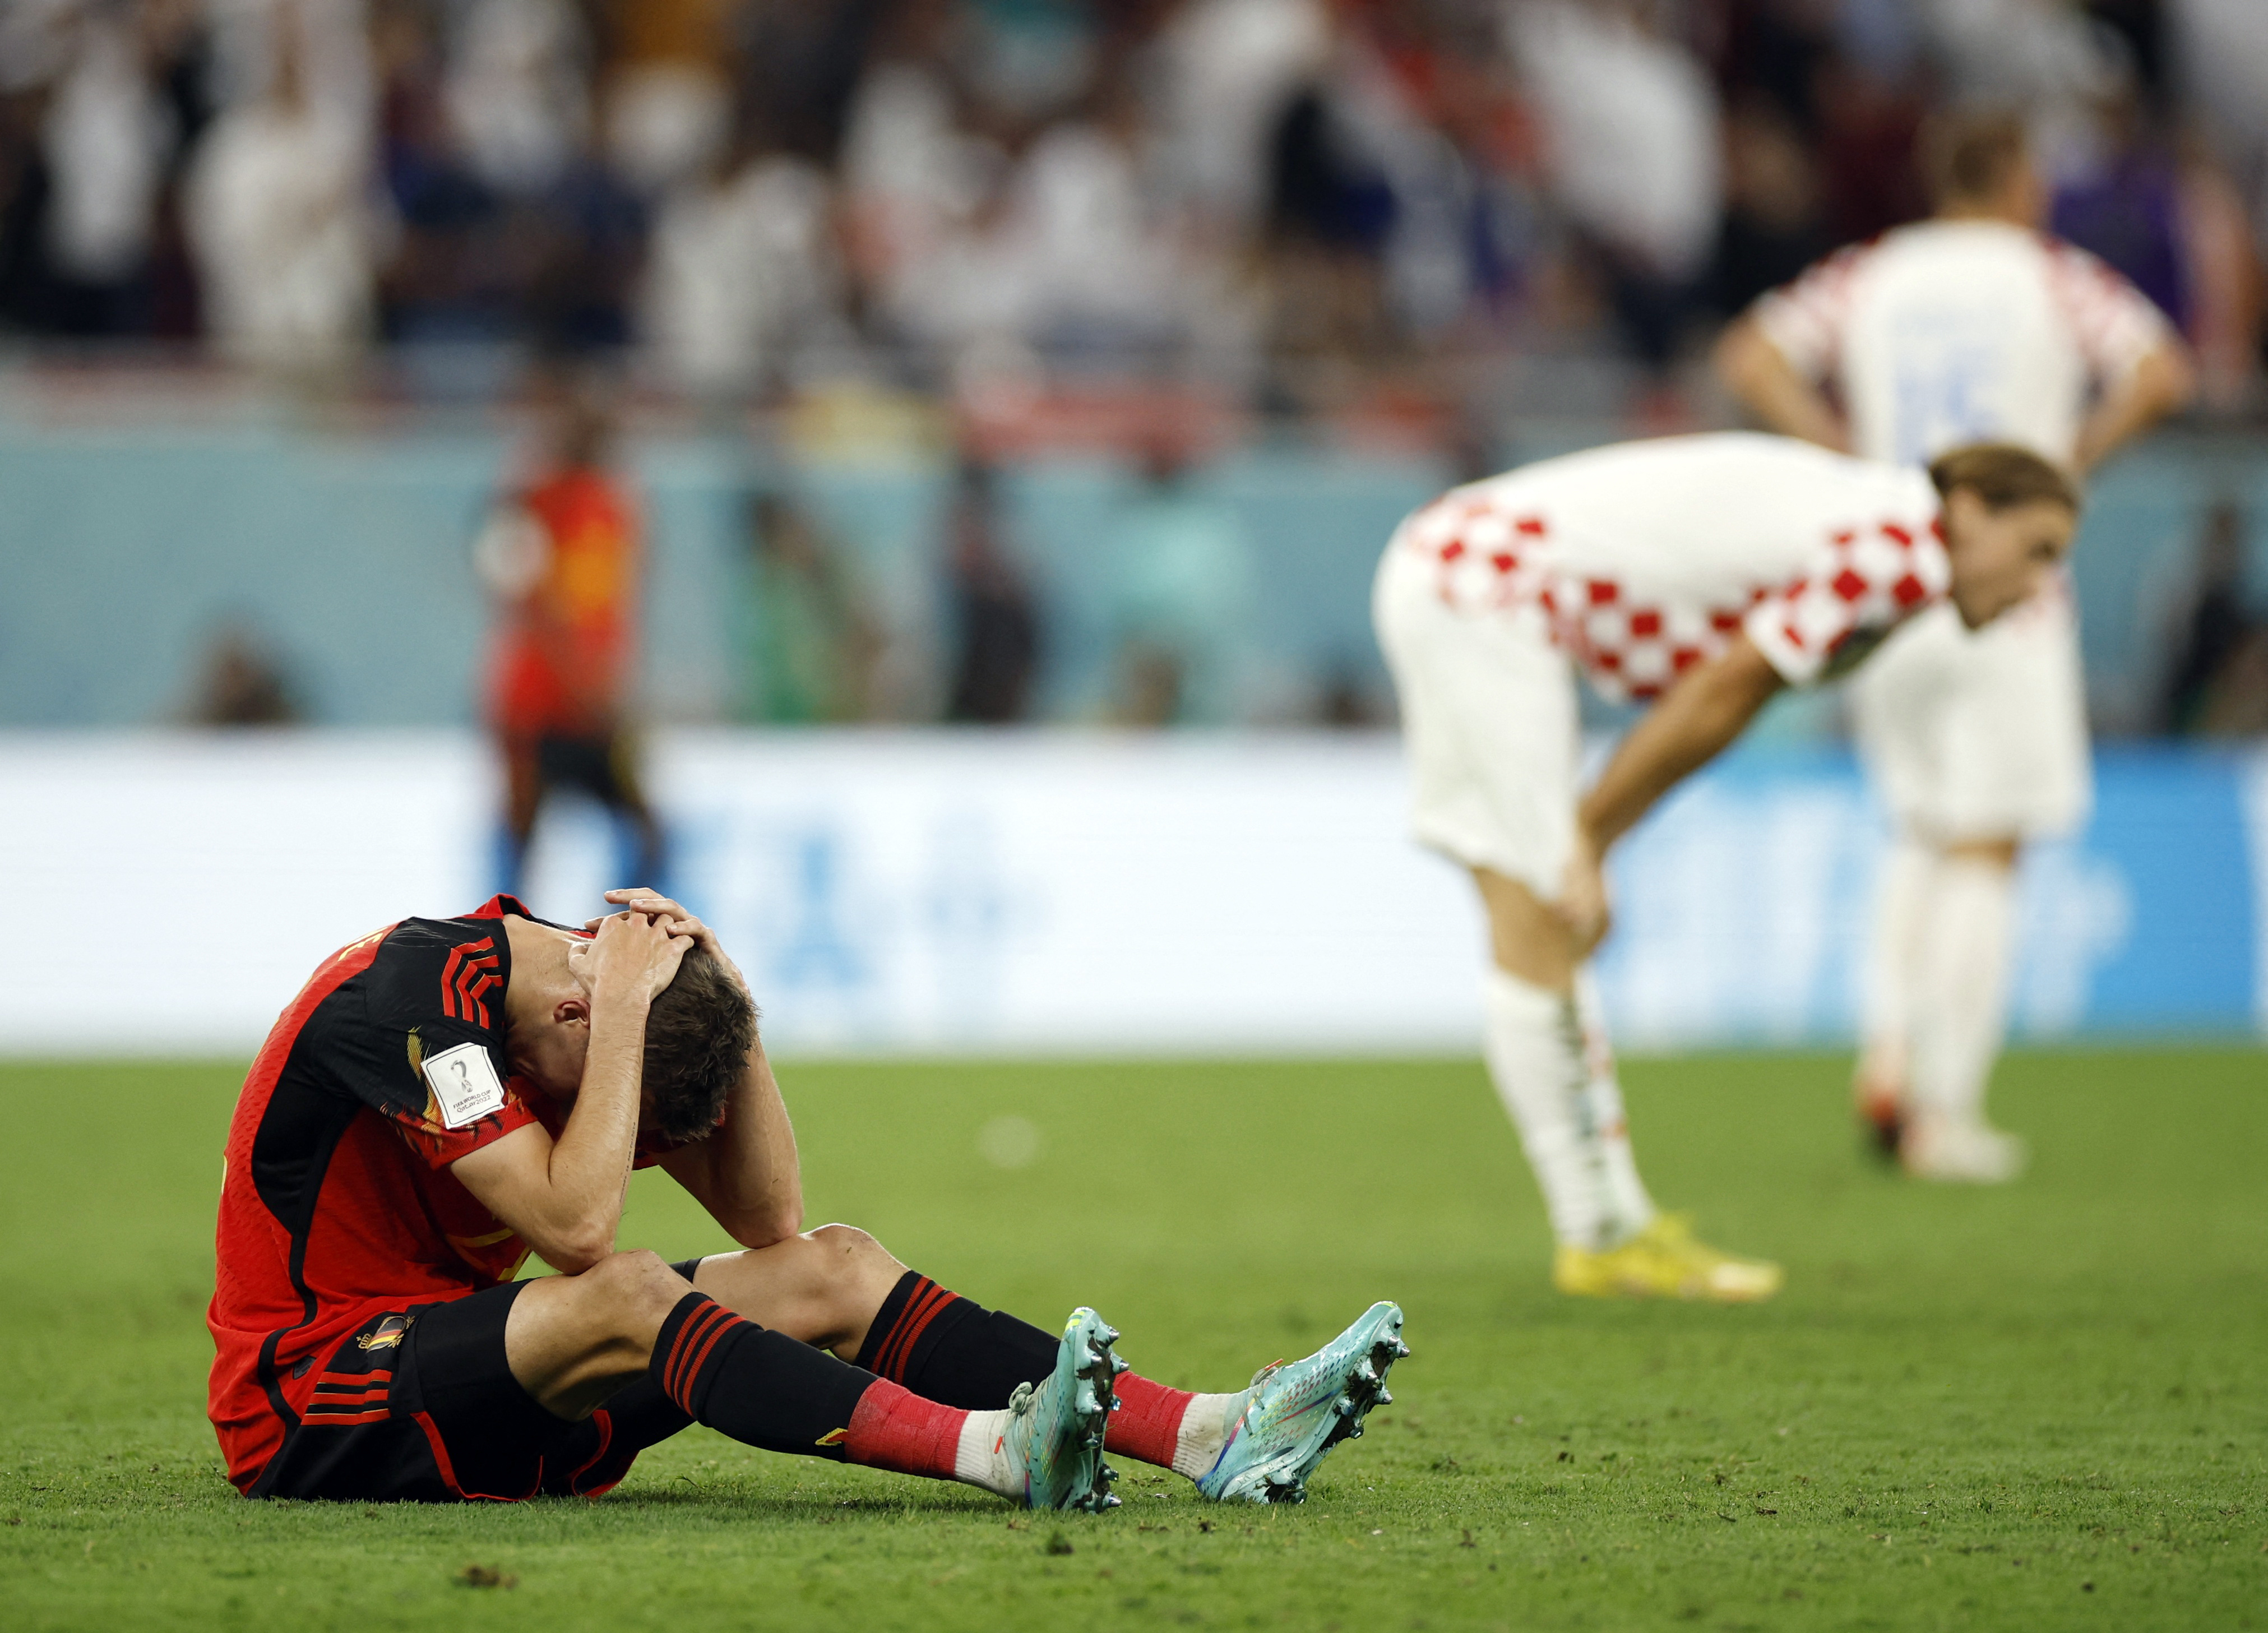 Tras empate sin goles, Bélgica quedó eliminado del Mundial Qatar 2022. Croacia avanzó como segundo del grupo. REUTERS/John Sibley